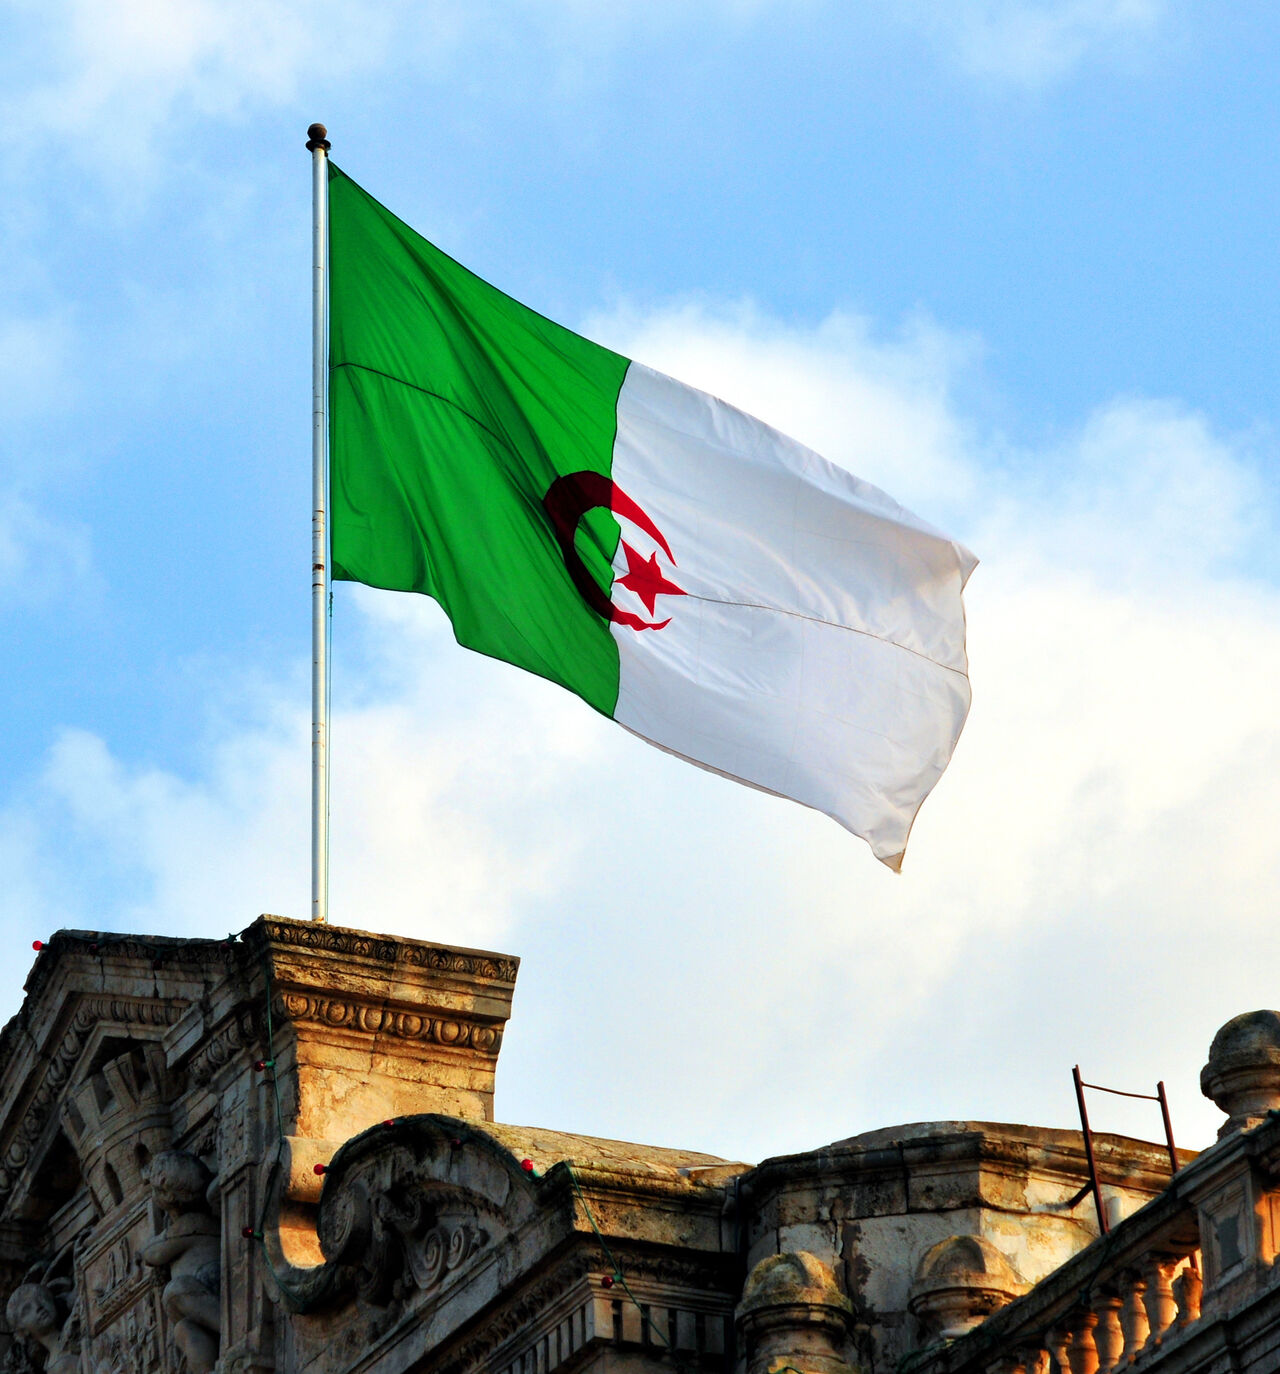 Algeria cover image - flag